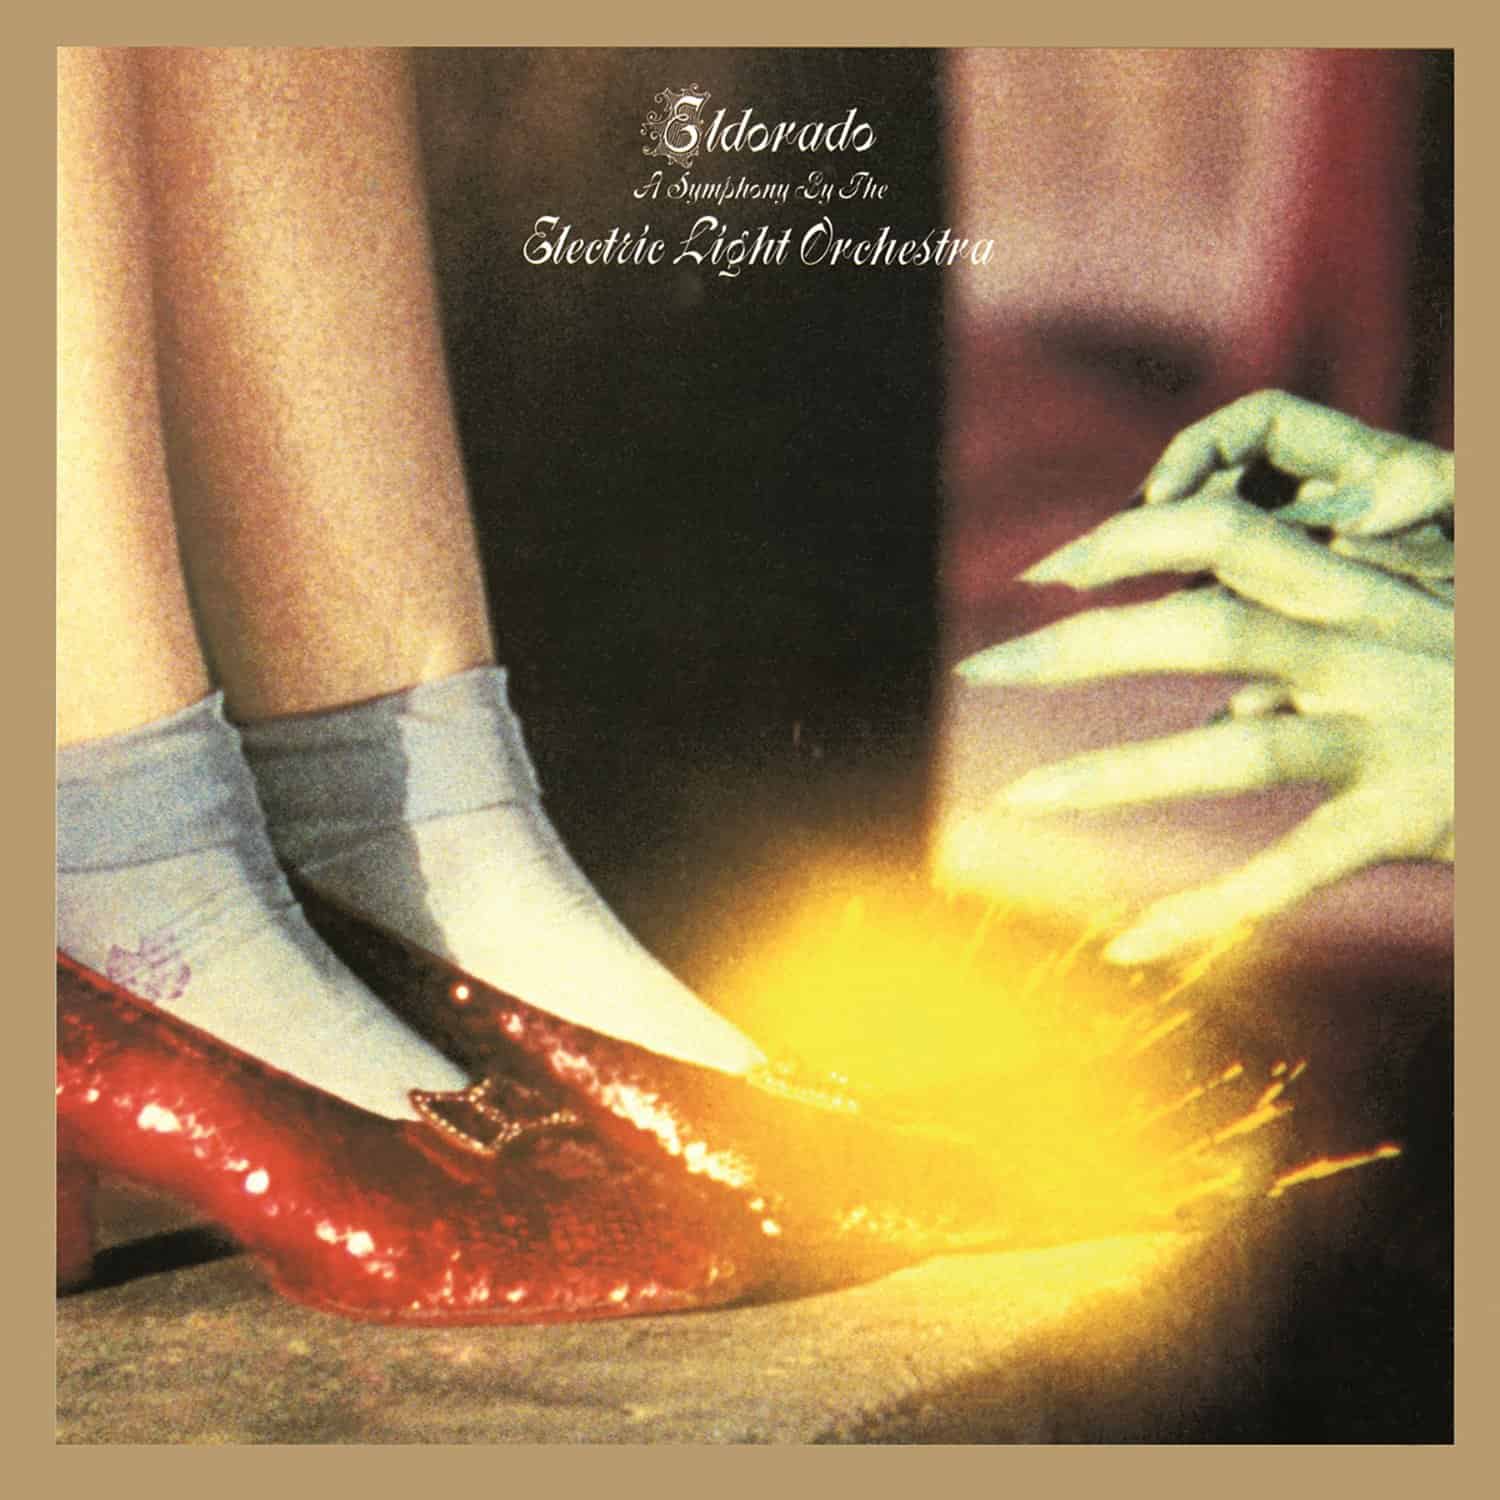 Electric-Light-Orchestra-Eldorado-vinyl-record-album-front